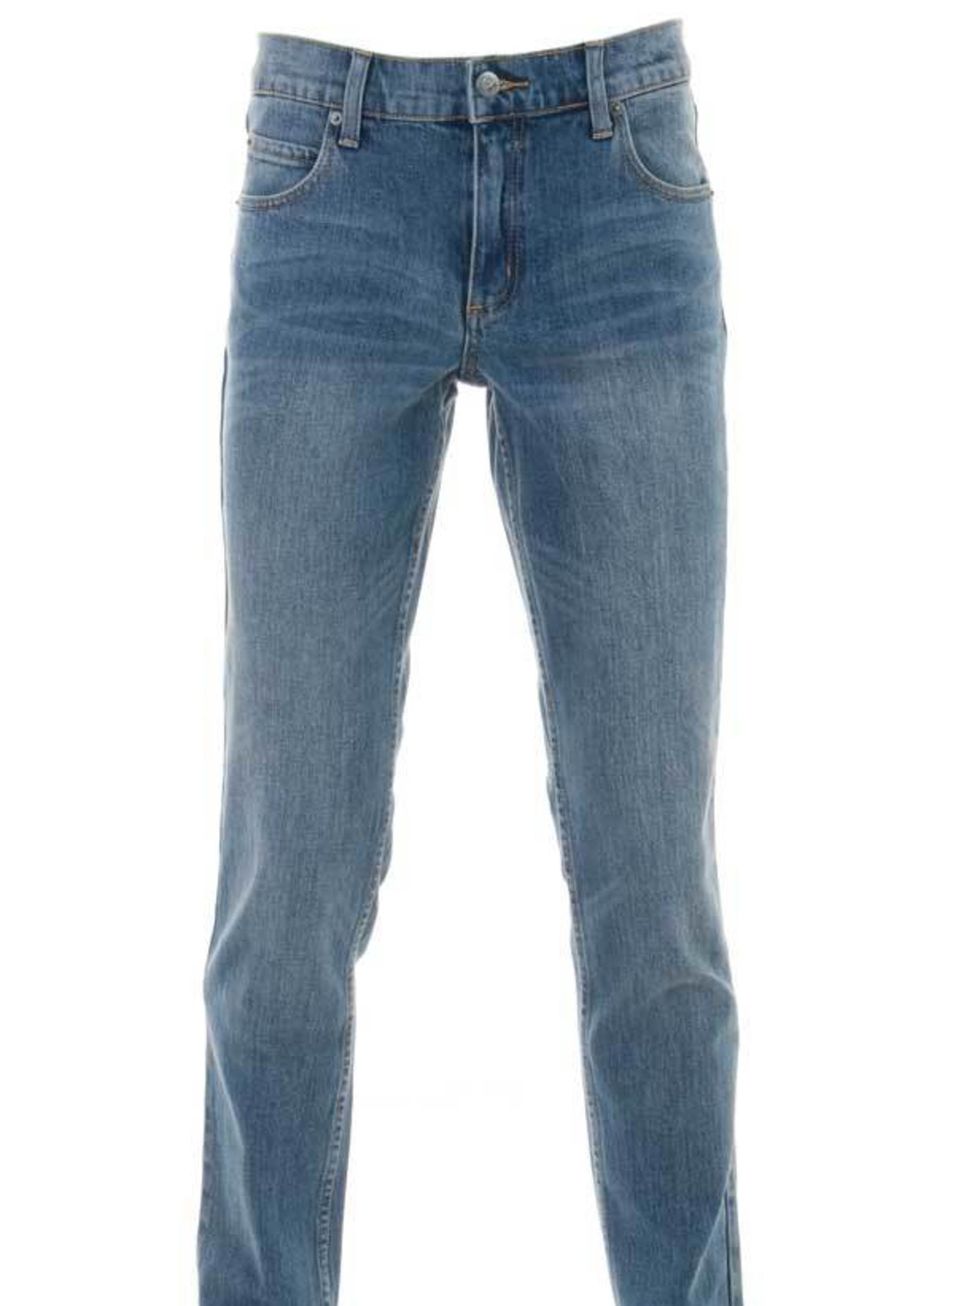 <p>Straight cut jeans, £57, by Cheap Monday at <a href="http://www.farfetch.com/shopping/women/search/schid-6368656170206d6f6e646179/item10025190.aspx">Farfetch</a> </p>